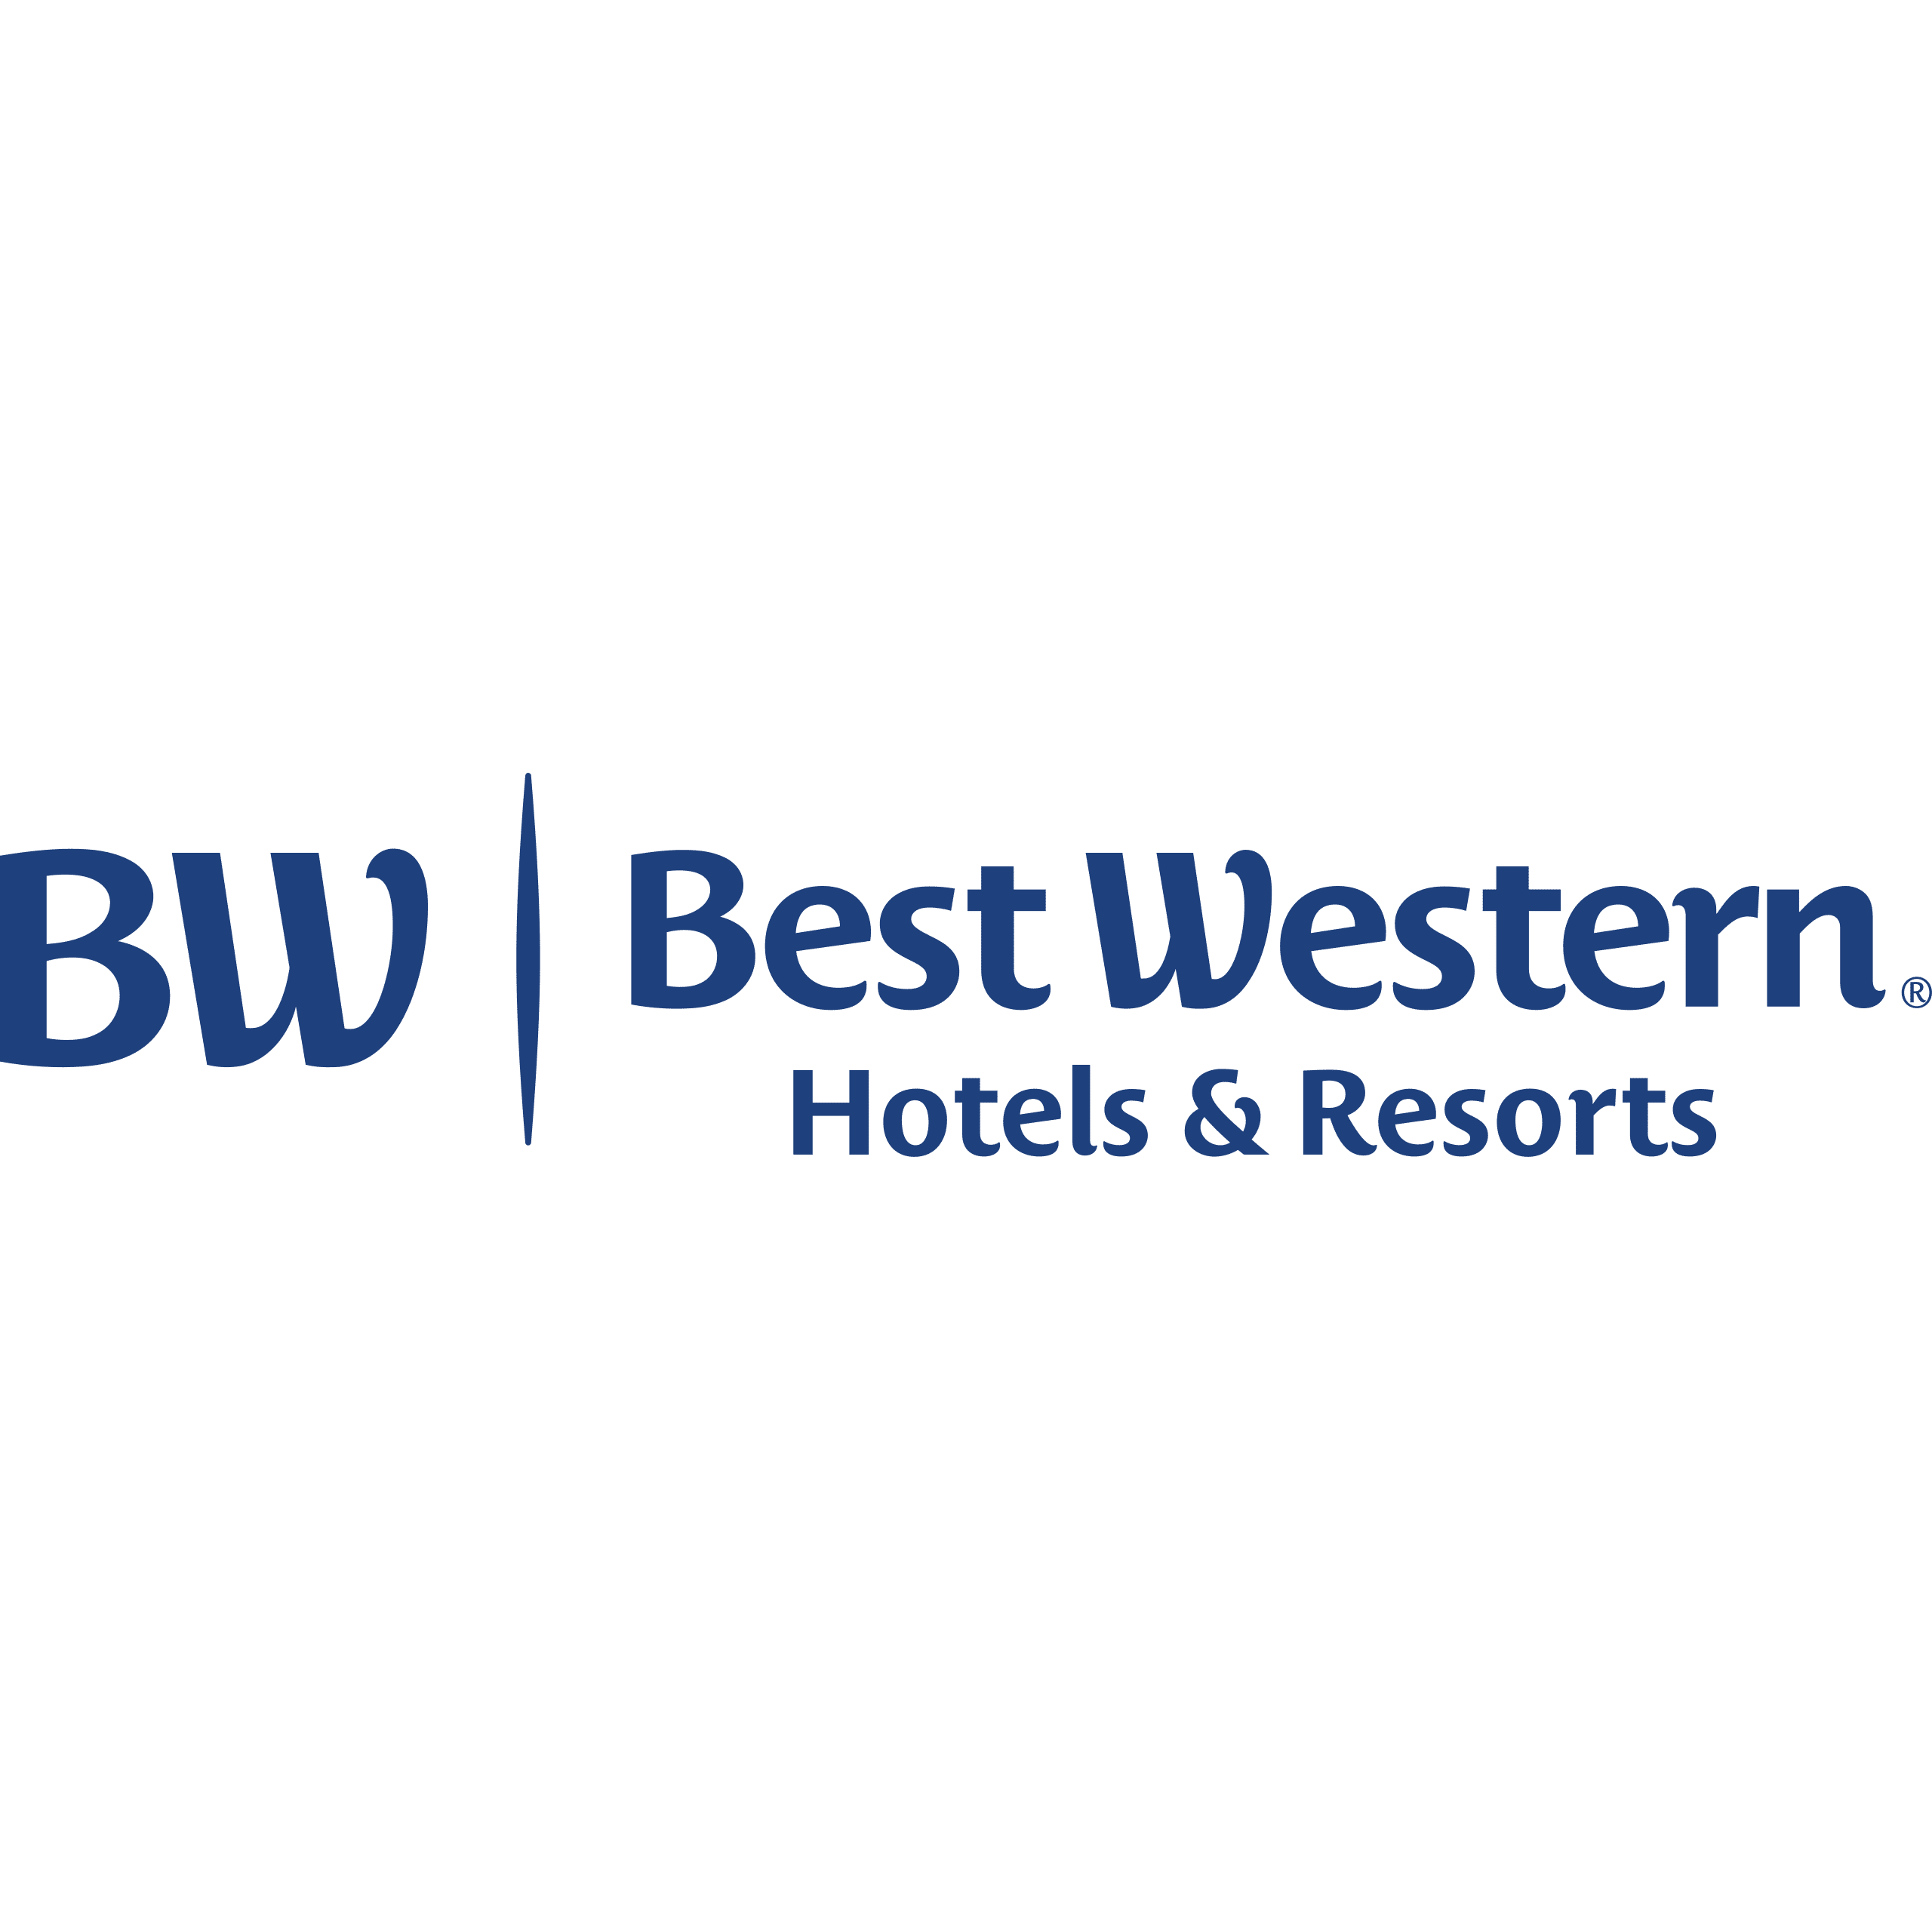 2560px-Best_Western_Hotels_&_Resorts_logo.svg